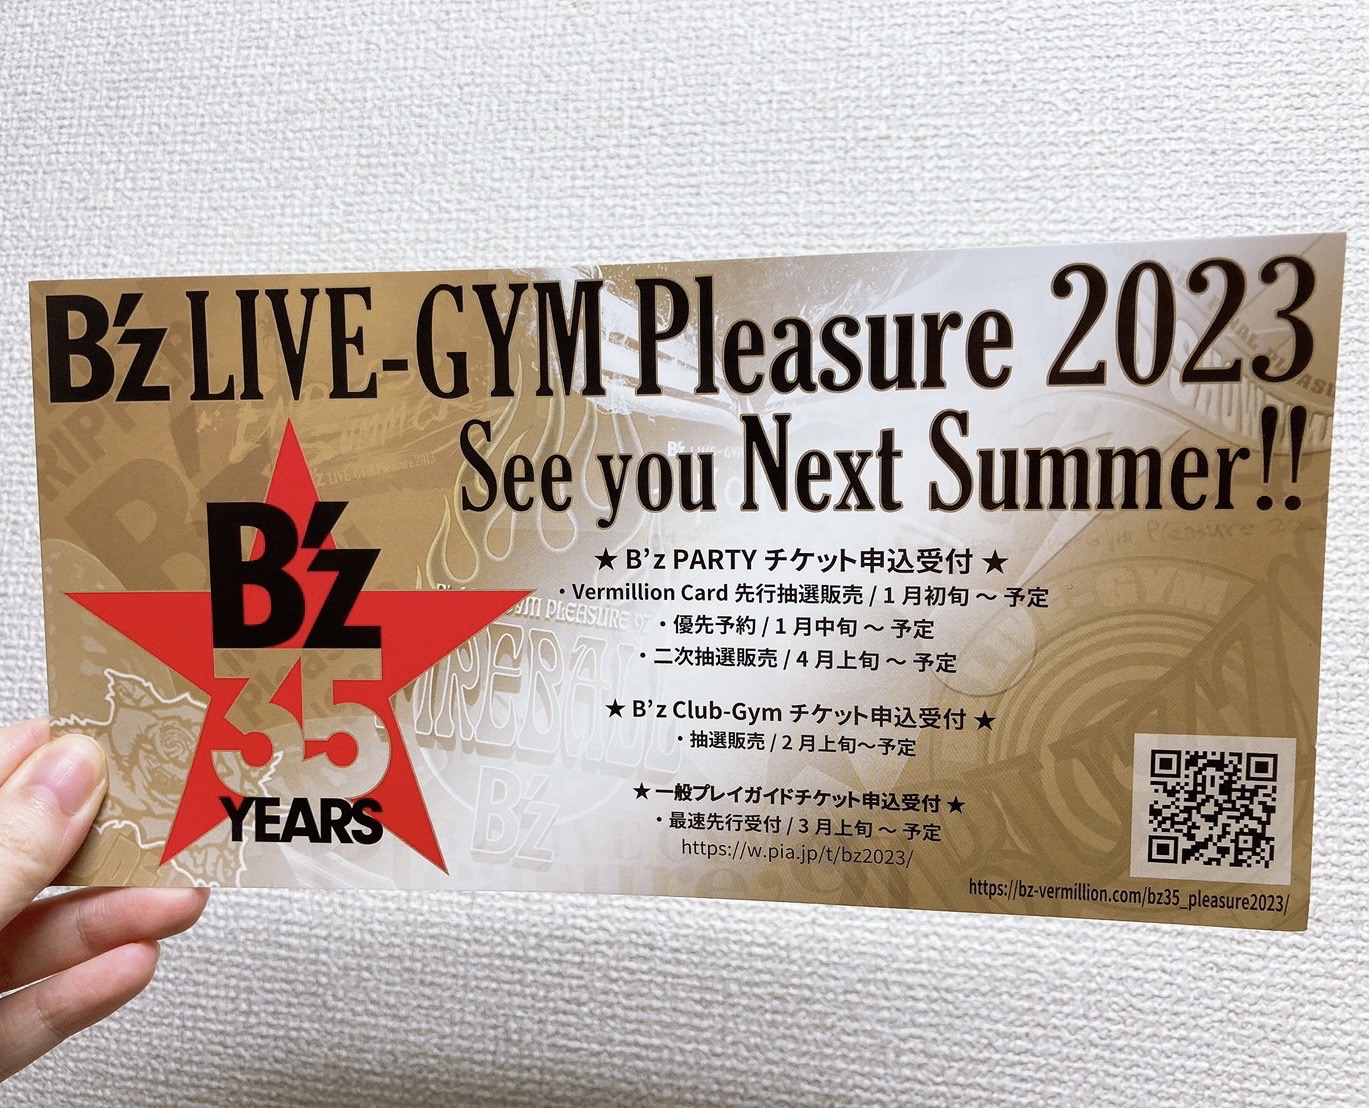 『B'z LIVE-GYM Pleasure 2023 -STARS-』の送付されたDM